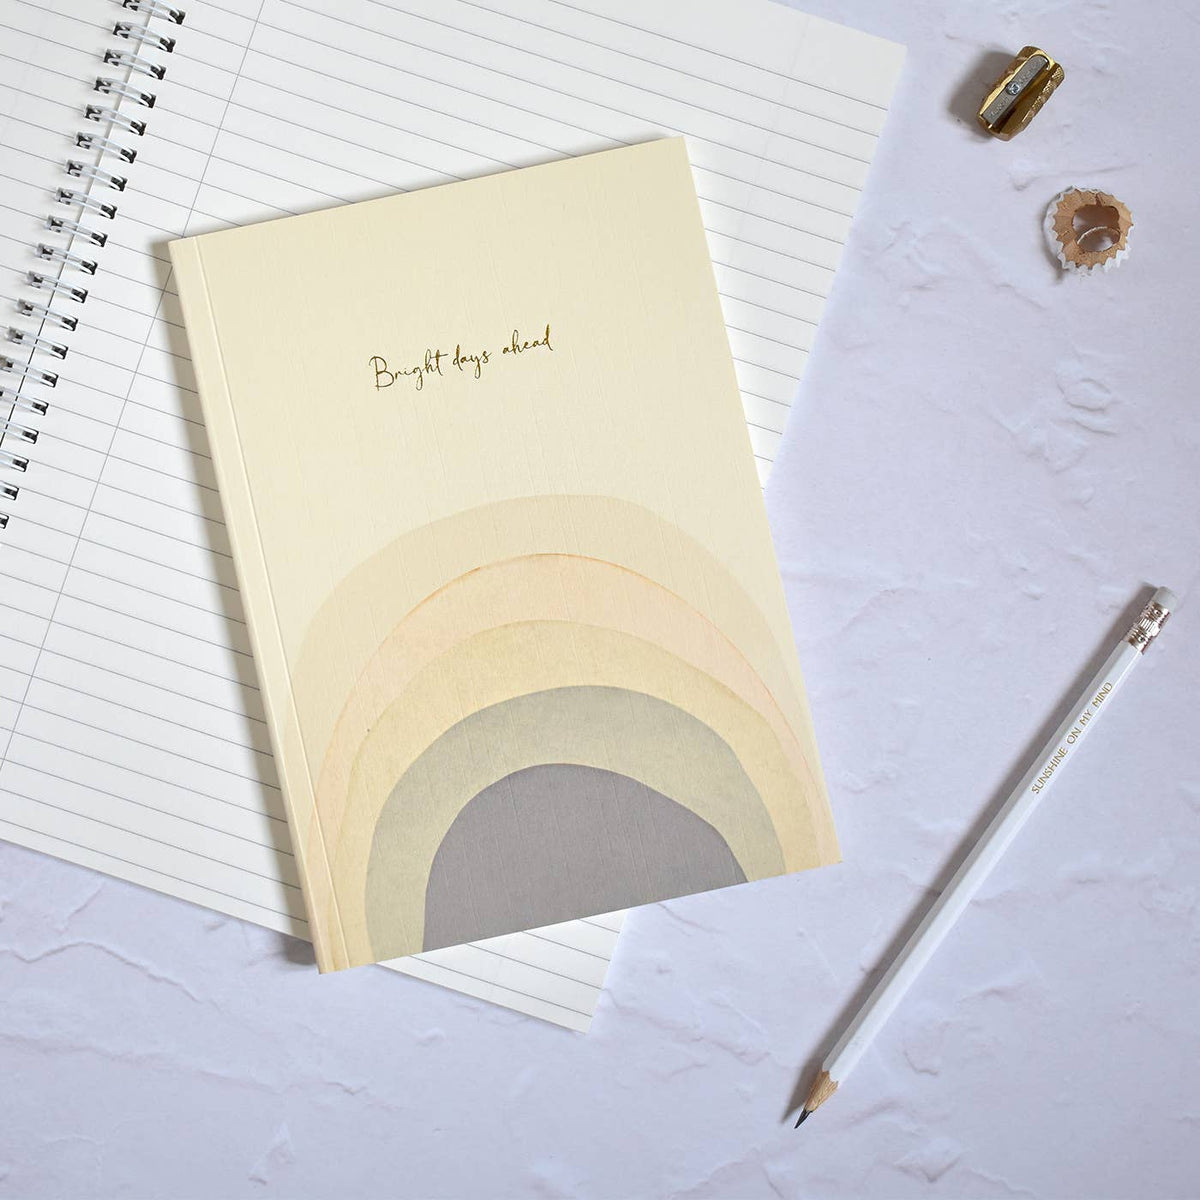 Rainbow Gold Foiled Notebook - Bright Days Ahead